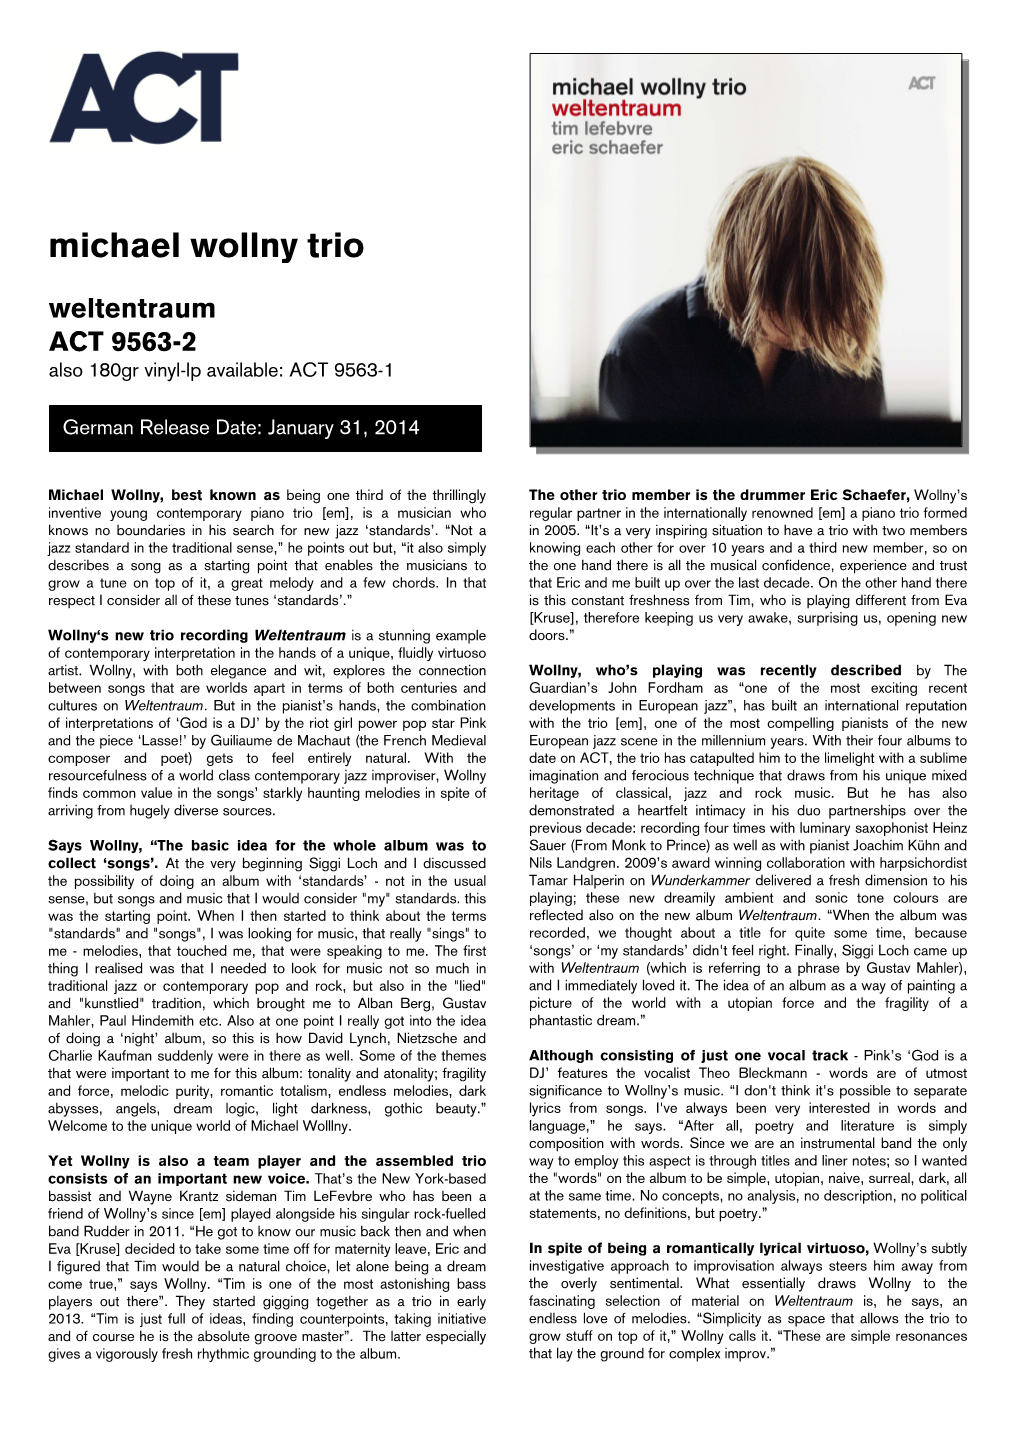 Michael Wollny Trio